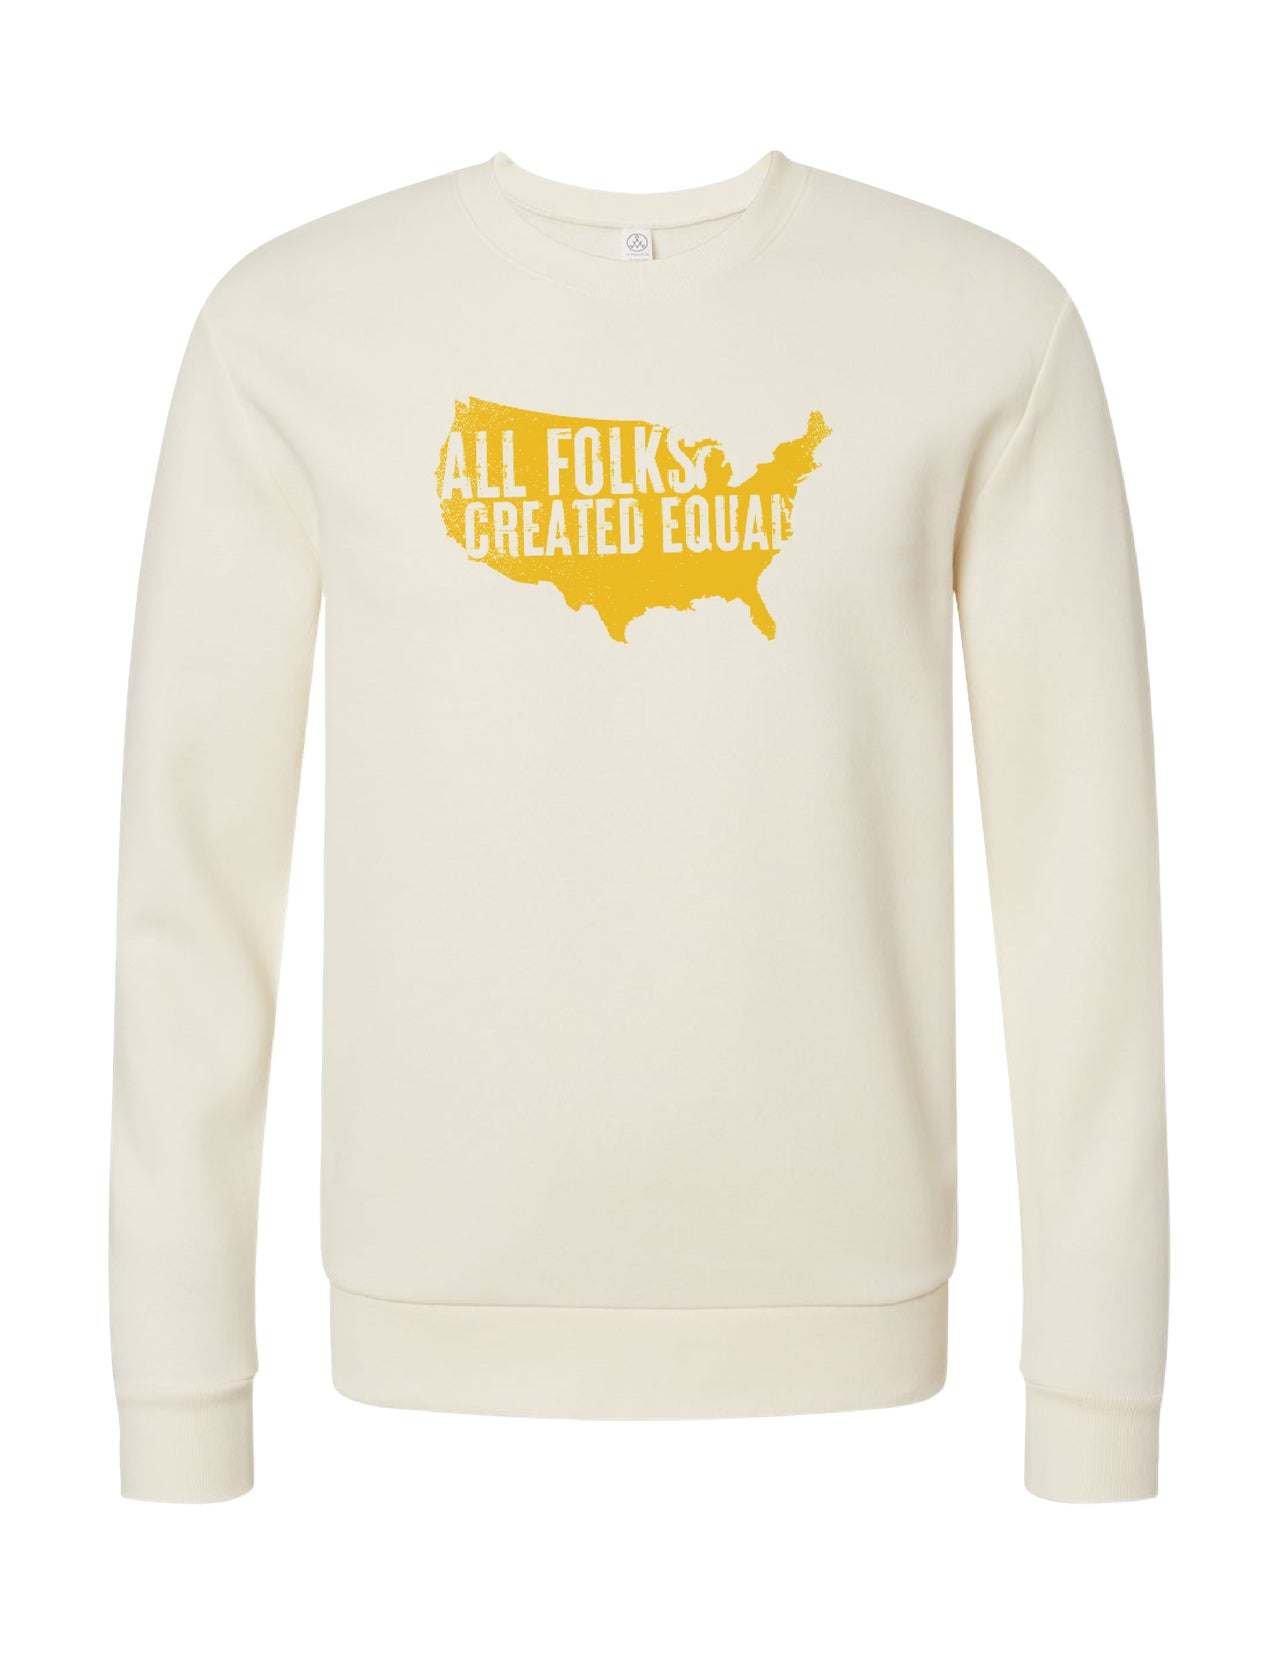 All Folks Created Equal Sweatshirt